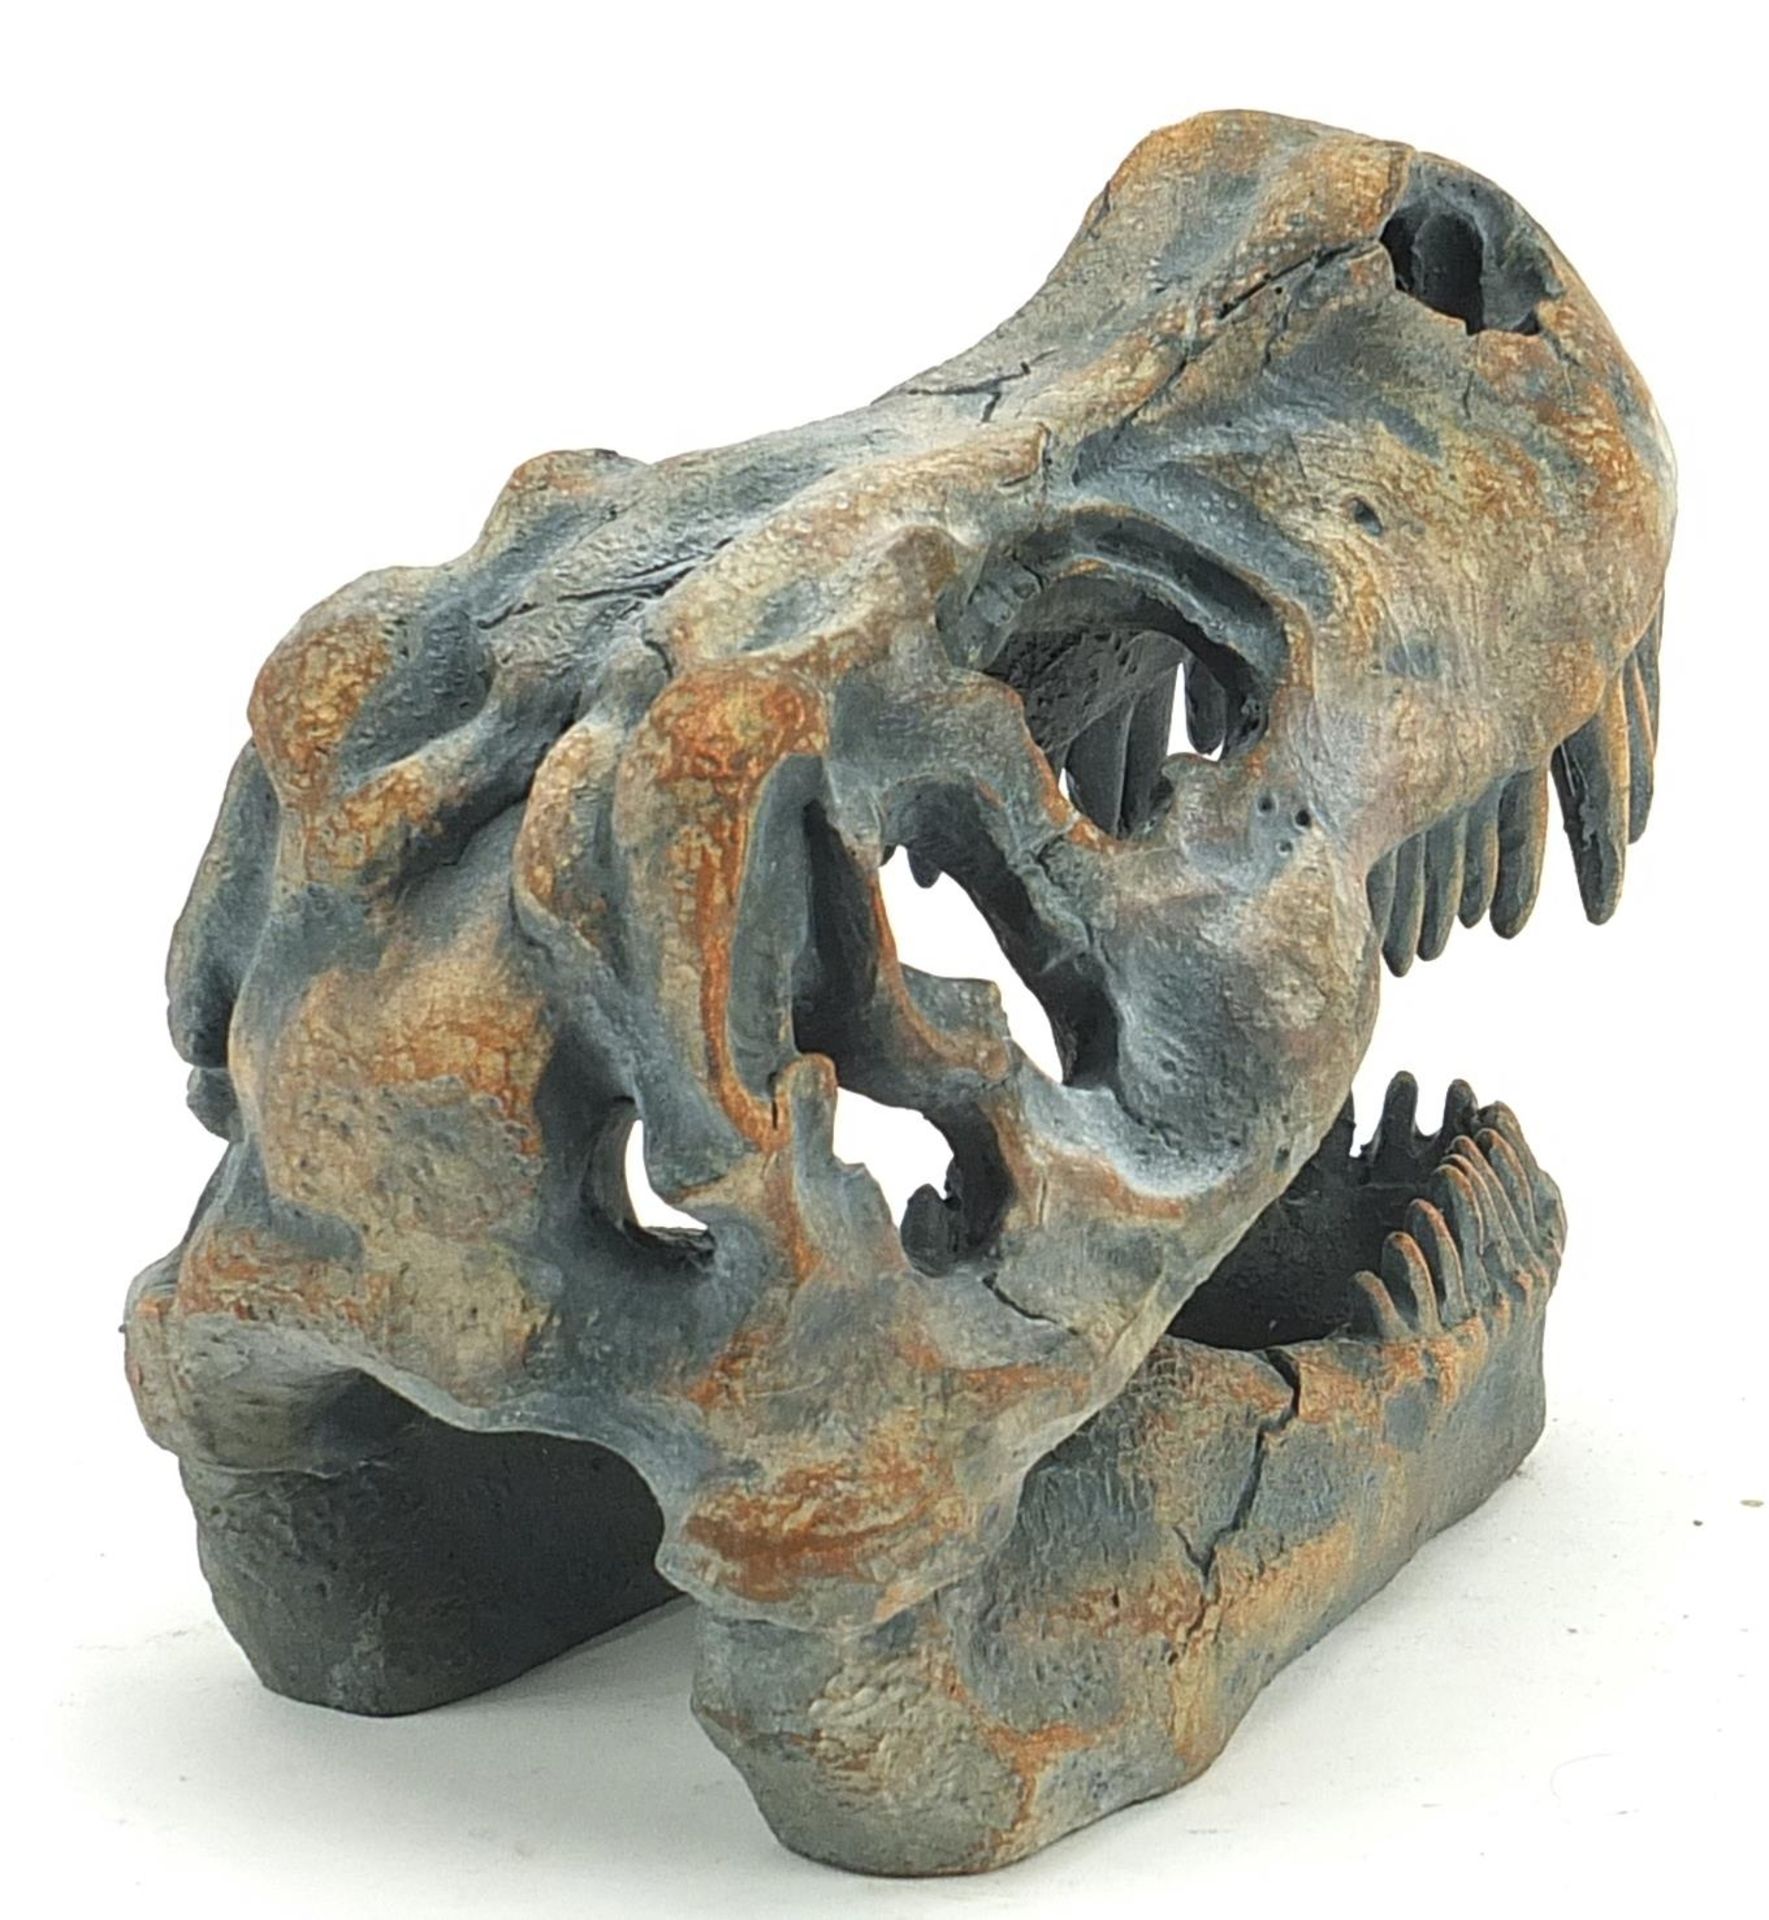 Decorative tyrannosaurus rex model skull, 18cm in length - Image 2 of 3